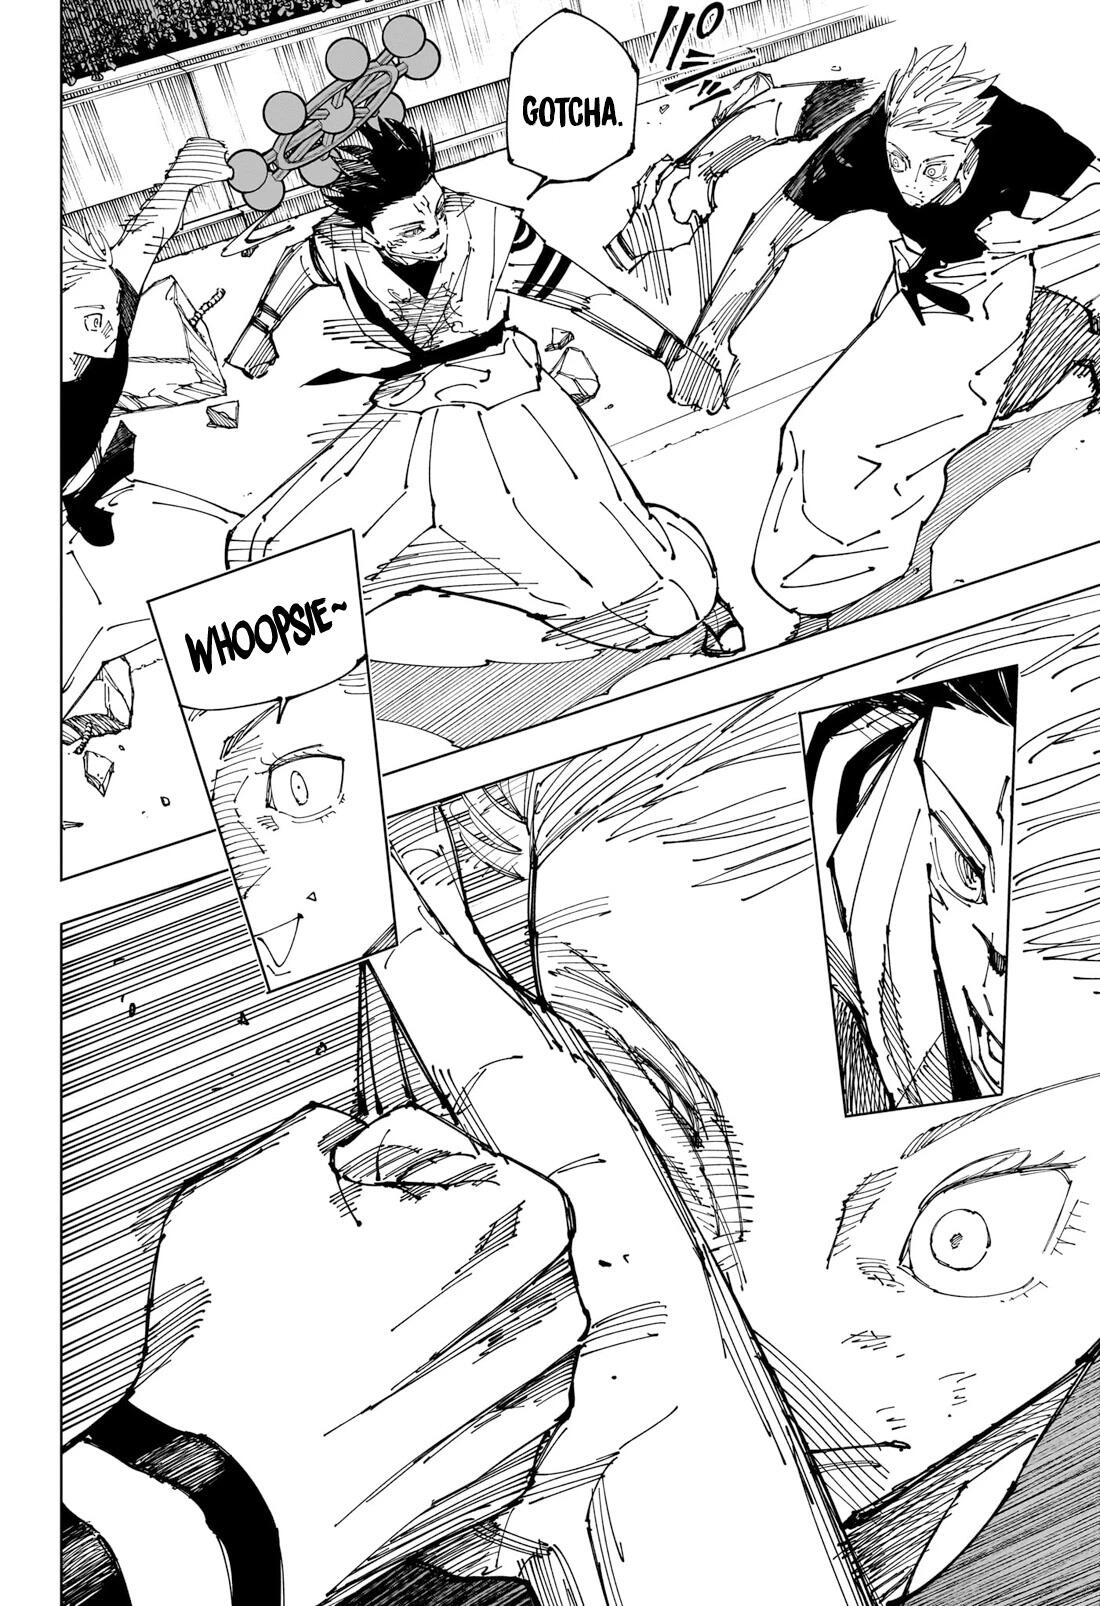 Jujutsu Kaisen Chapter 231: The Decisive Battle In The Uninhabited, Demon-Infested Shinjuku ⑨ page 10 - Mangakakalot